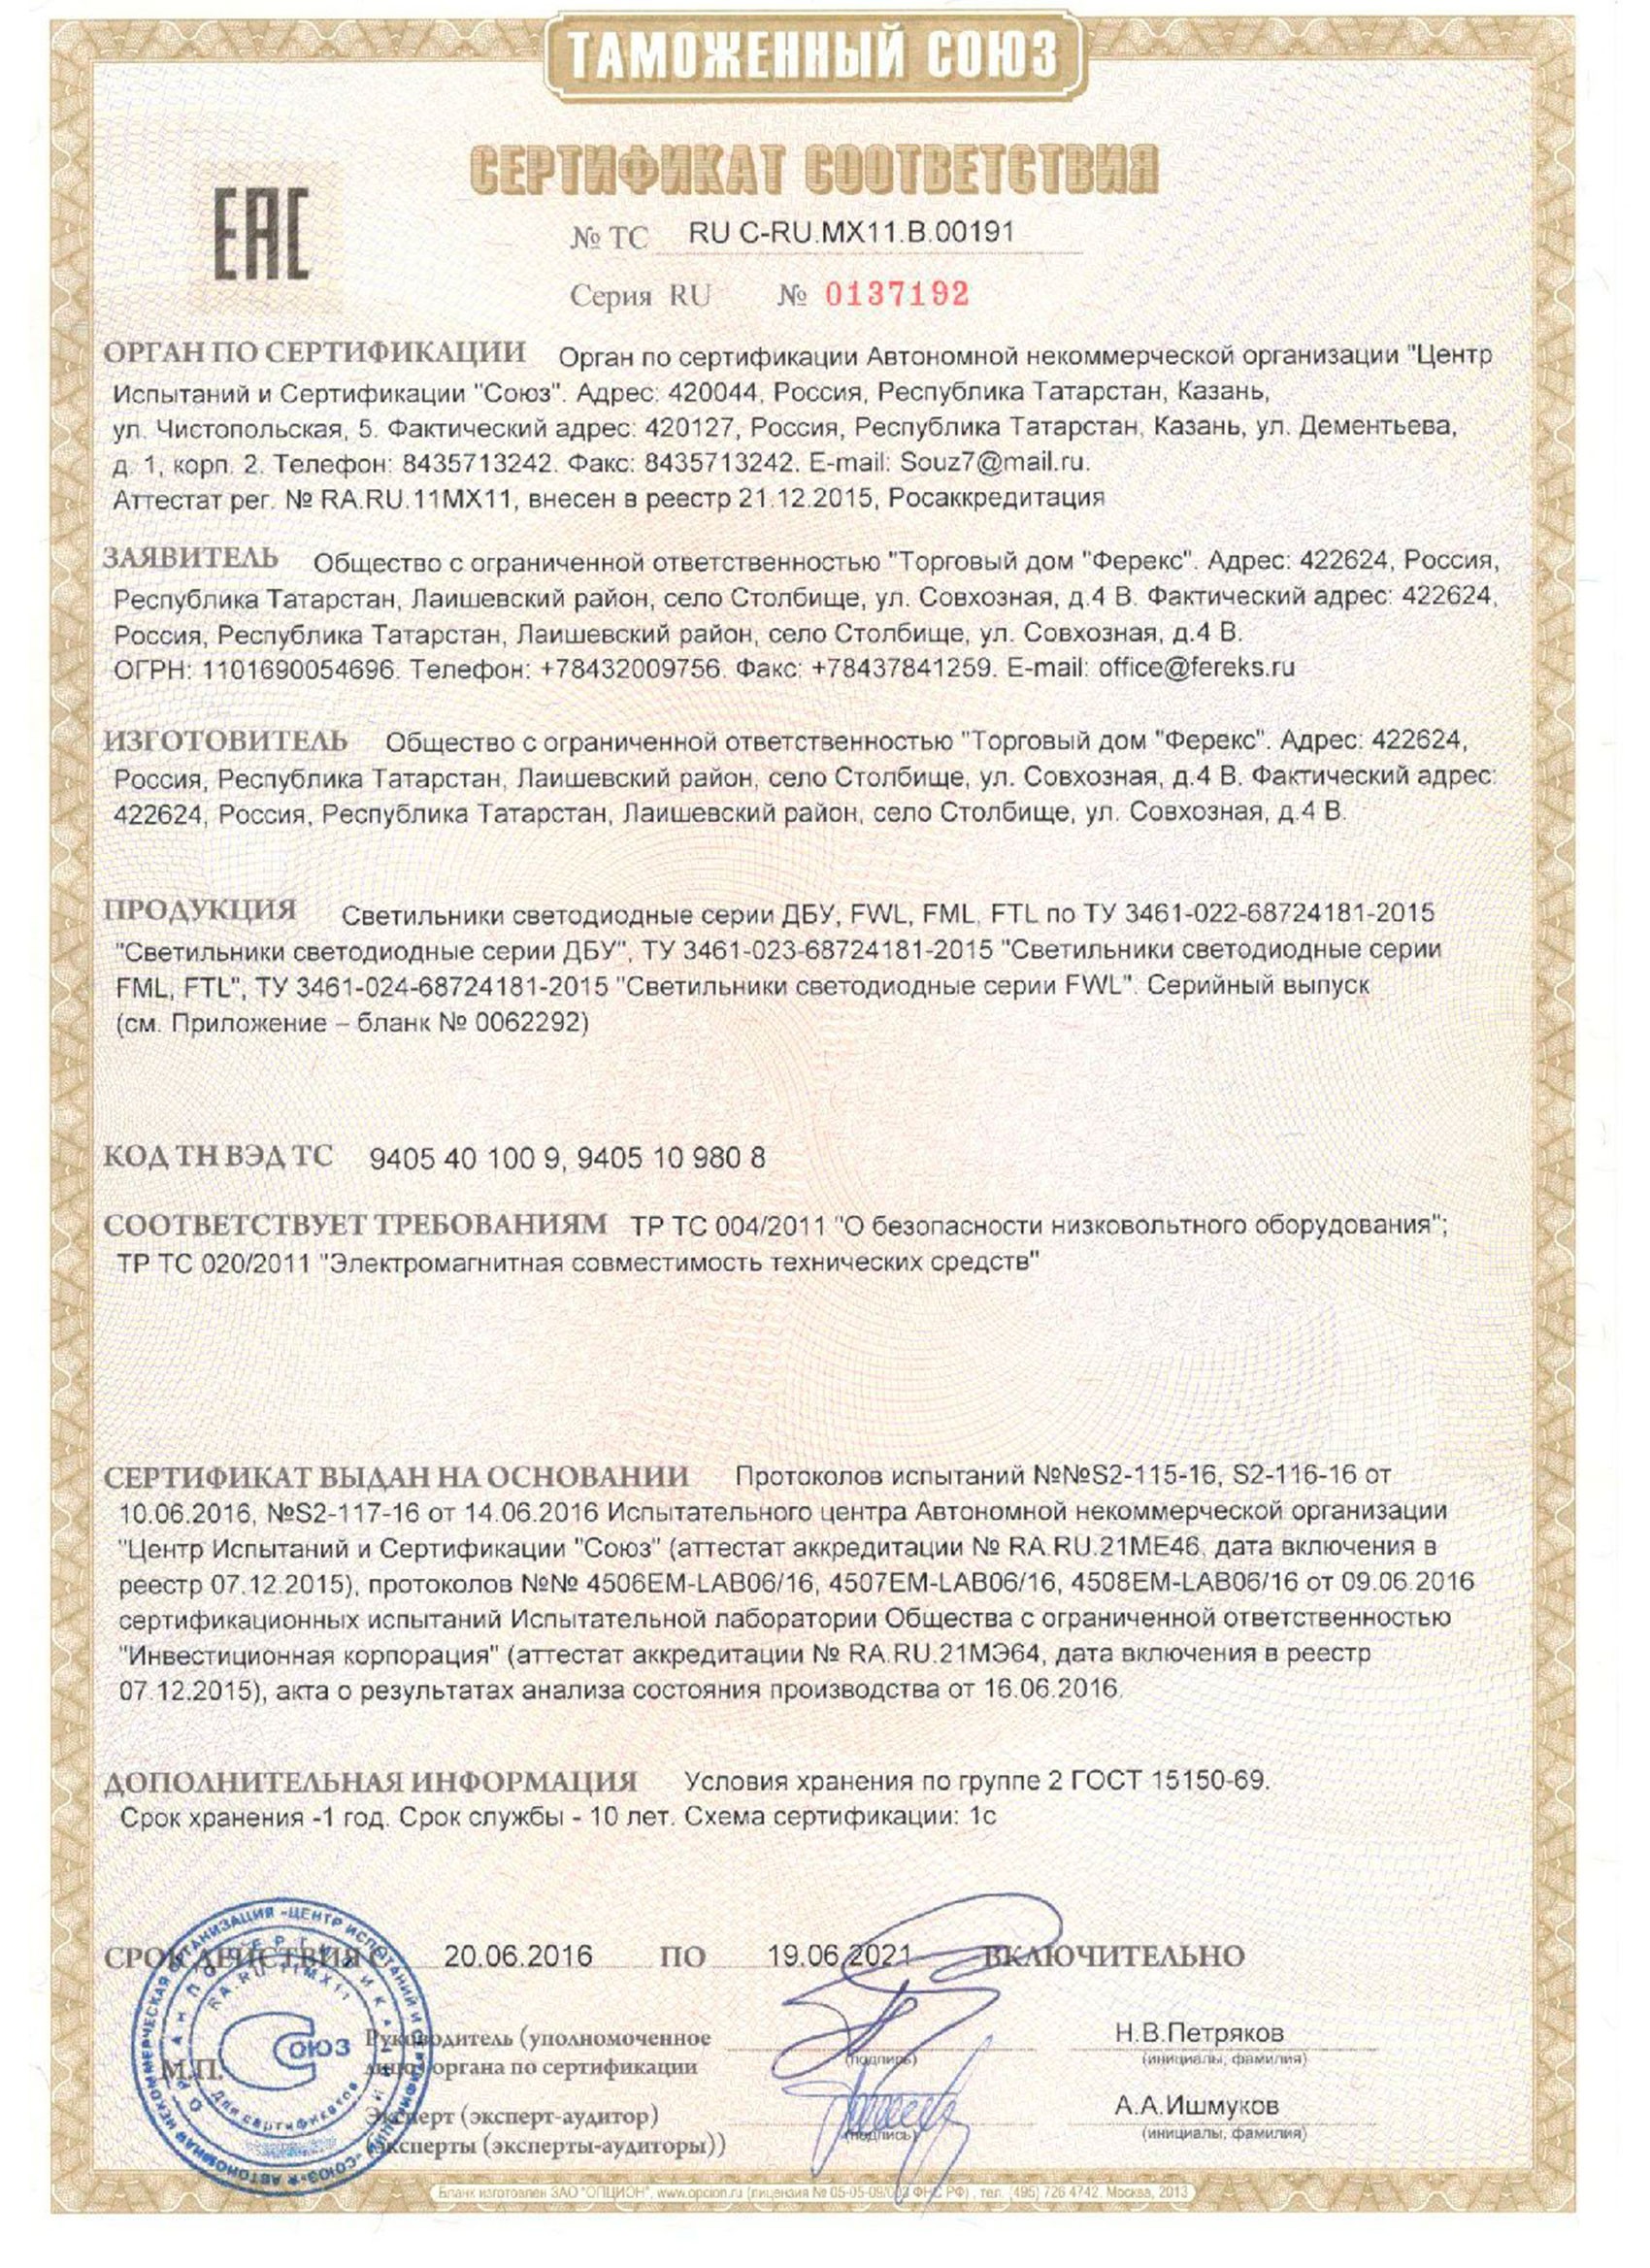 Сертификат таможенного союза на светильники ДБУ, FWL, FML, FTL